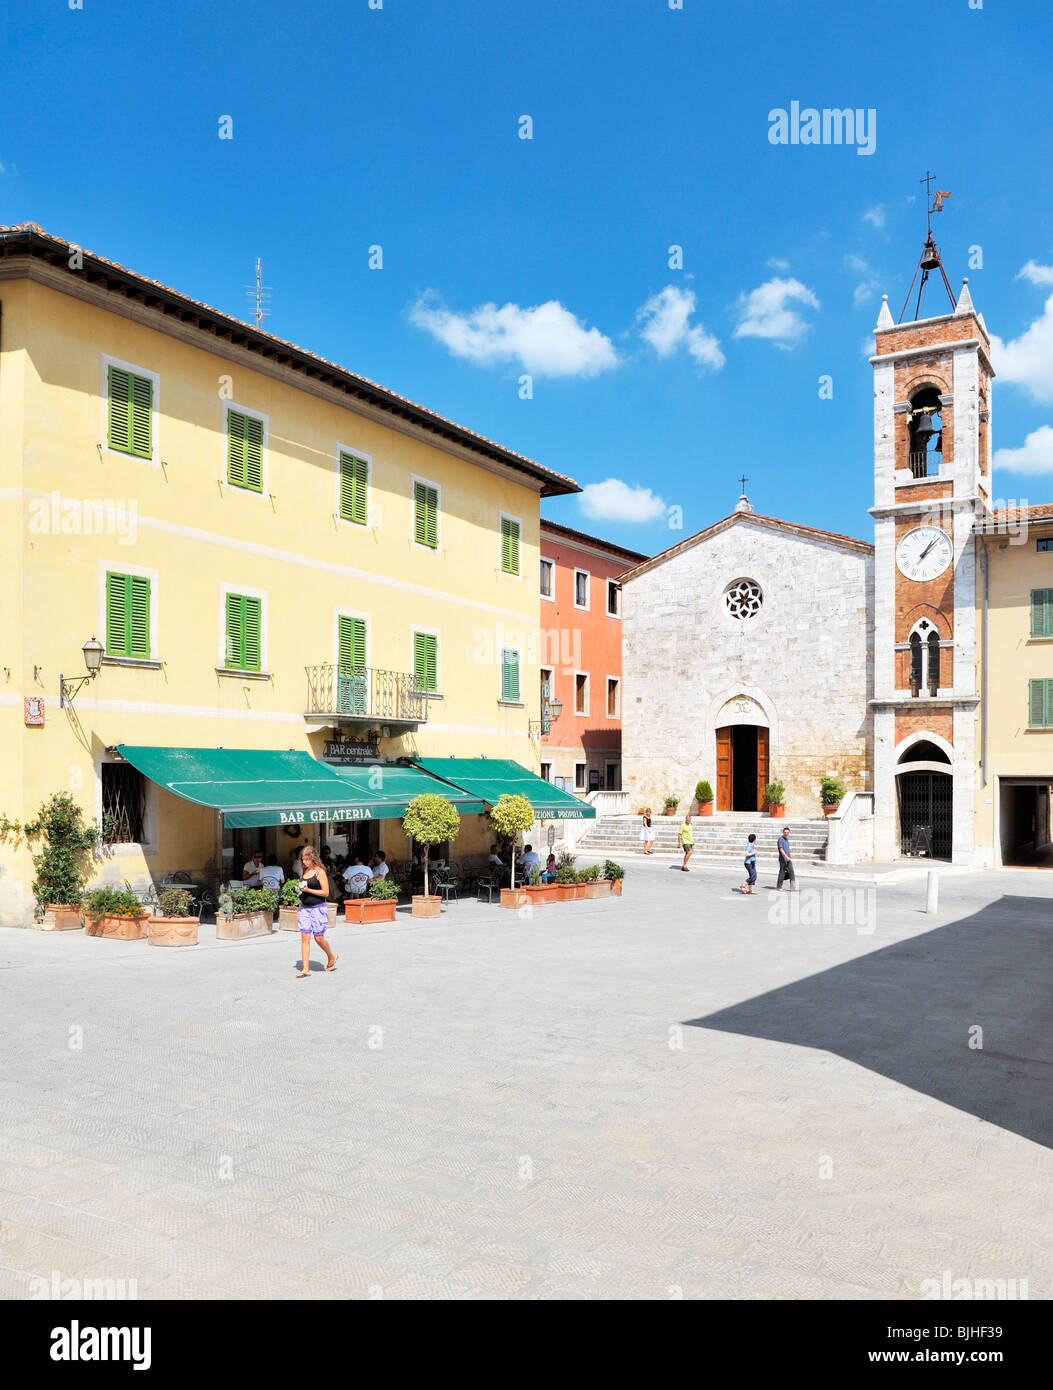 La Piazza della Liberta, en el centro de la cima de la colina del pueblo de San Quirico d'Orcia, Toscana, Italia Foto de stock